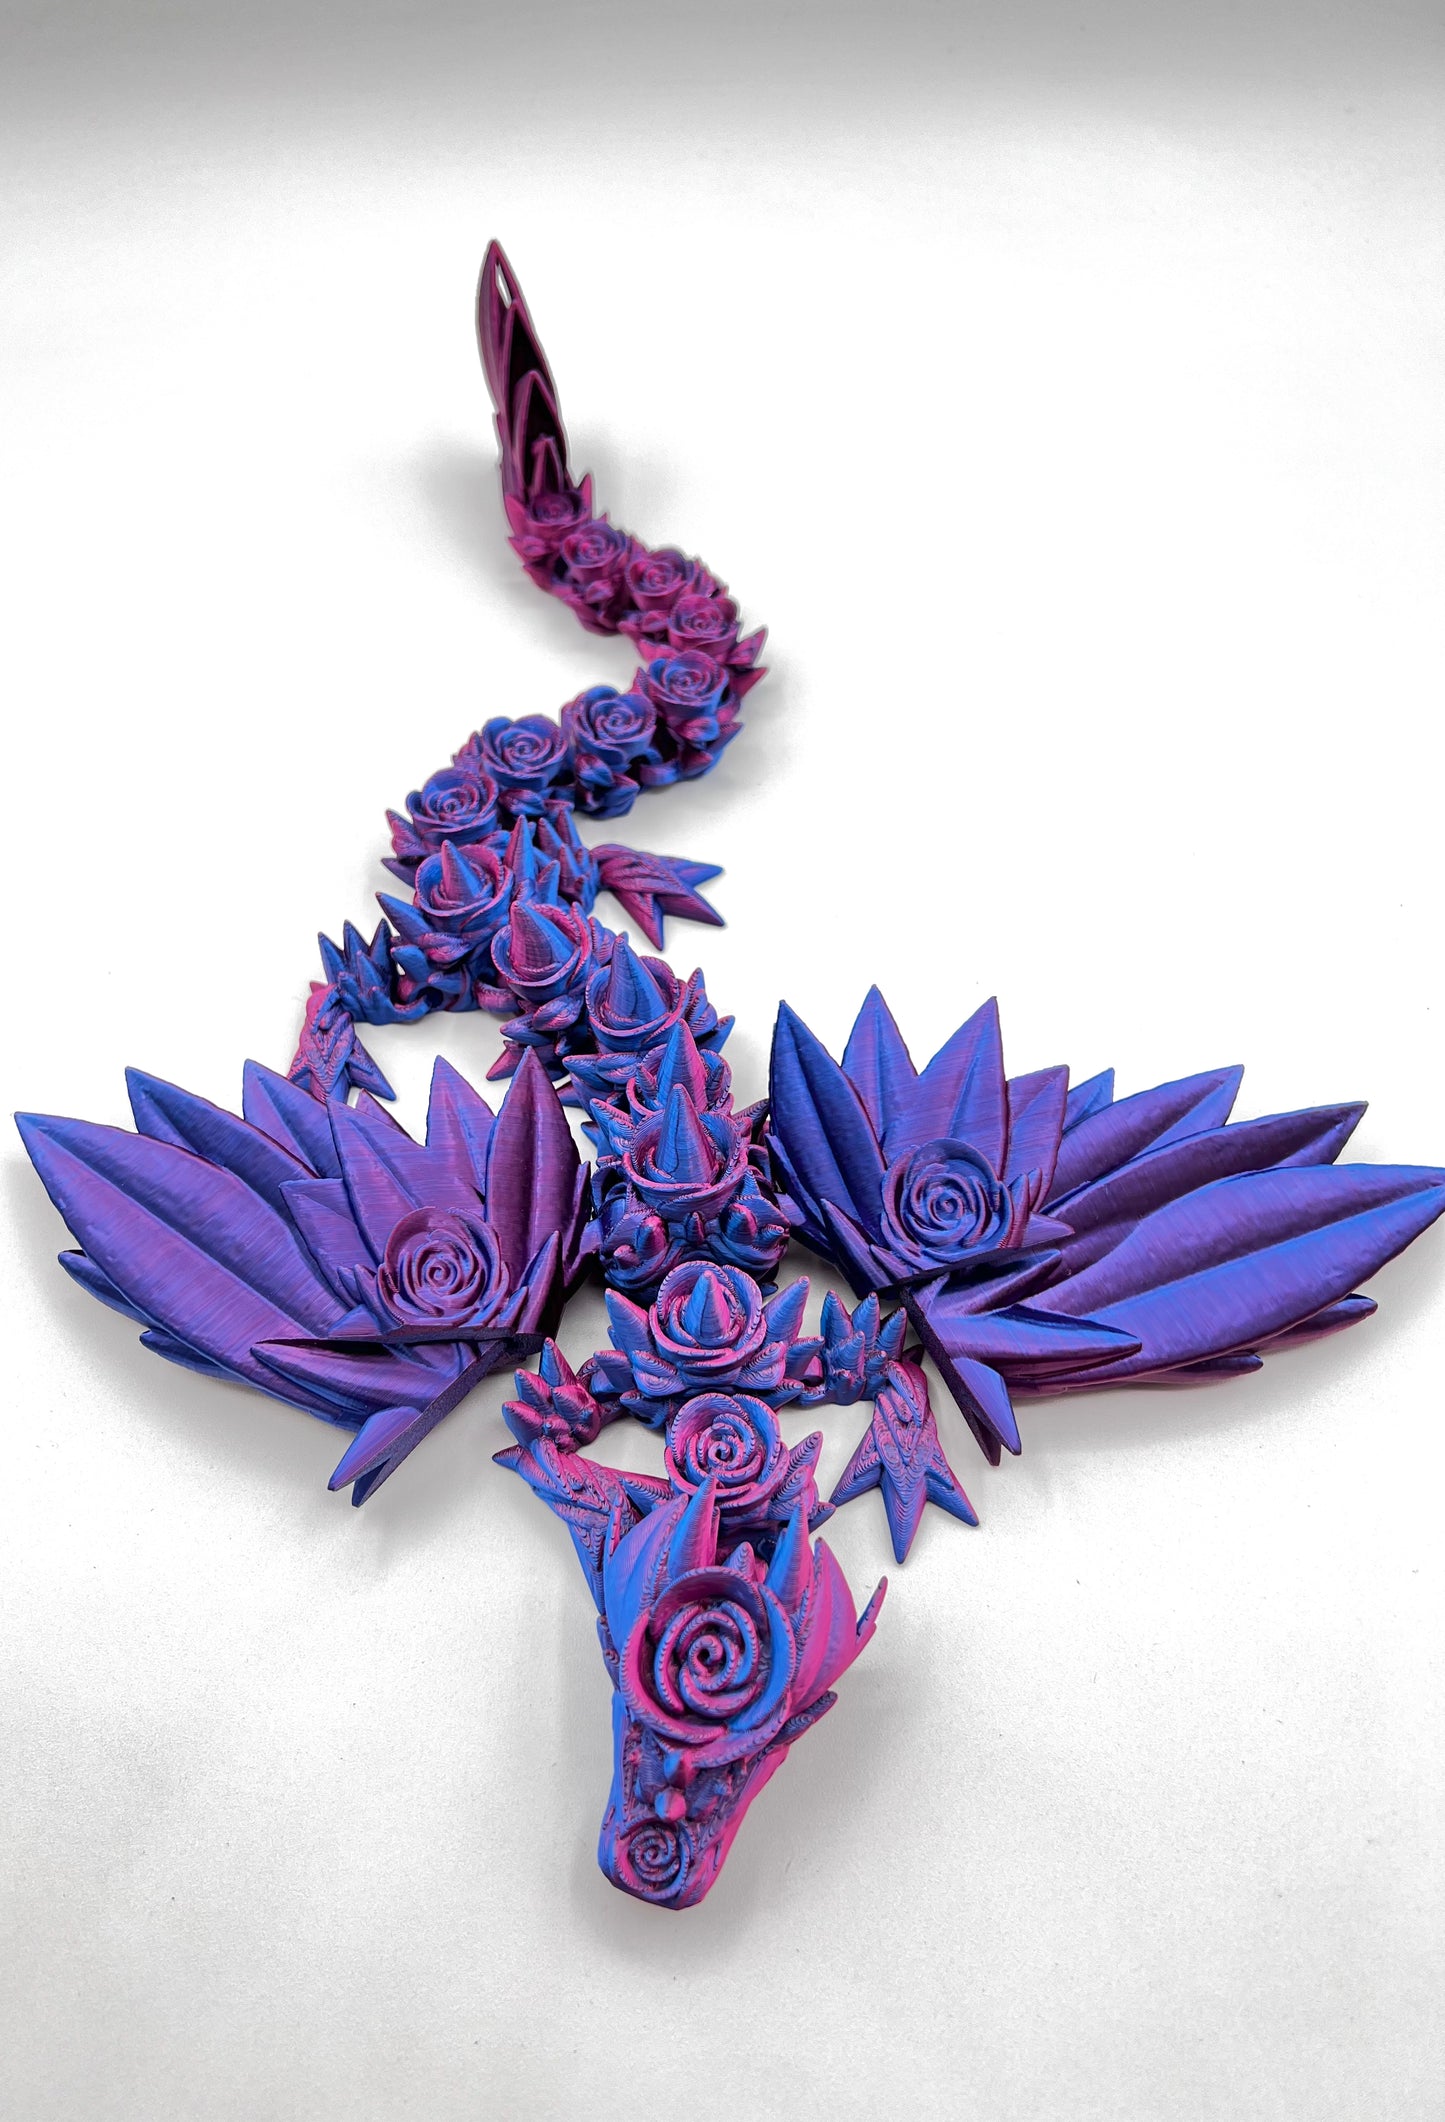 Rose-Winged Dragon